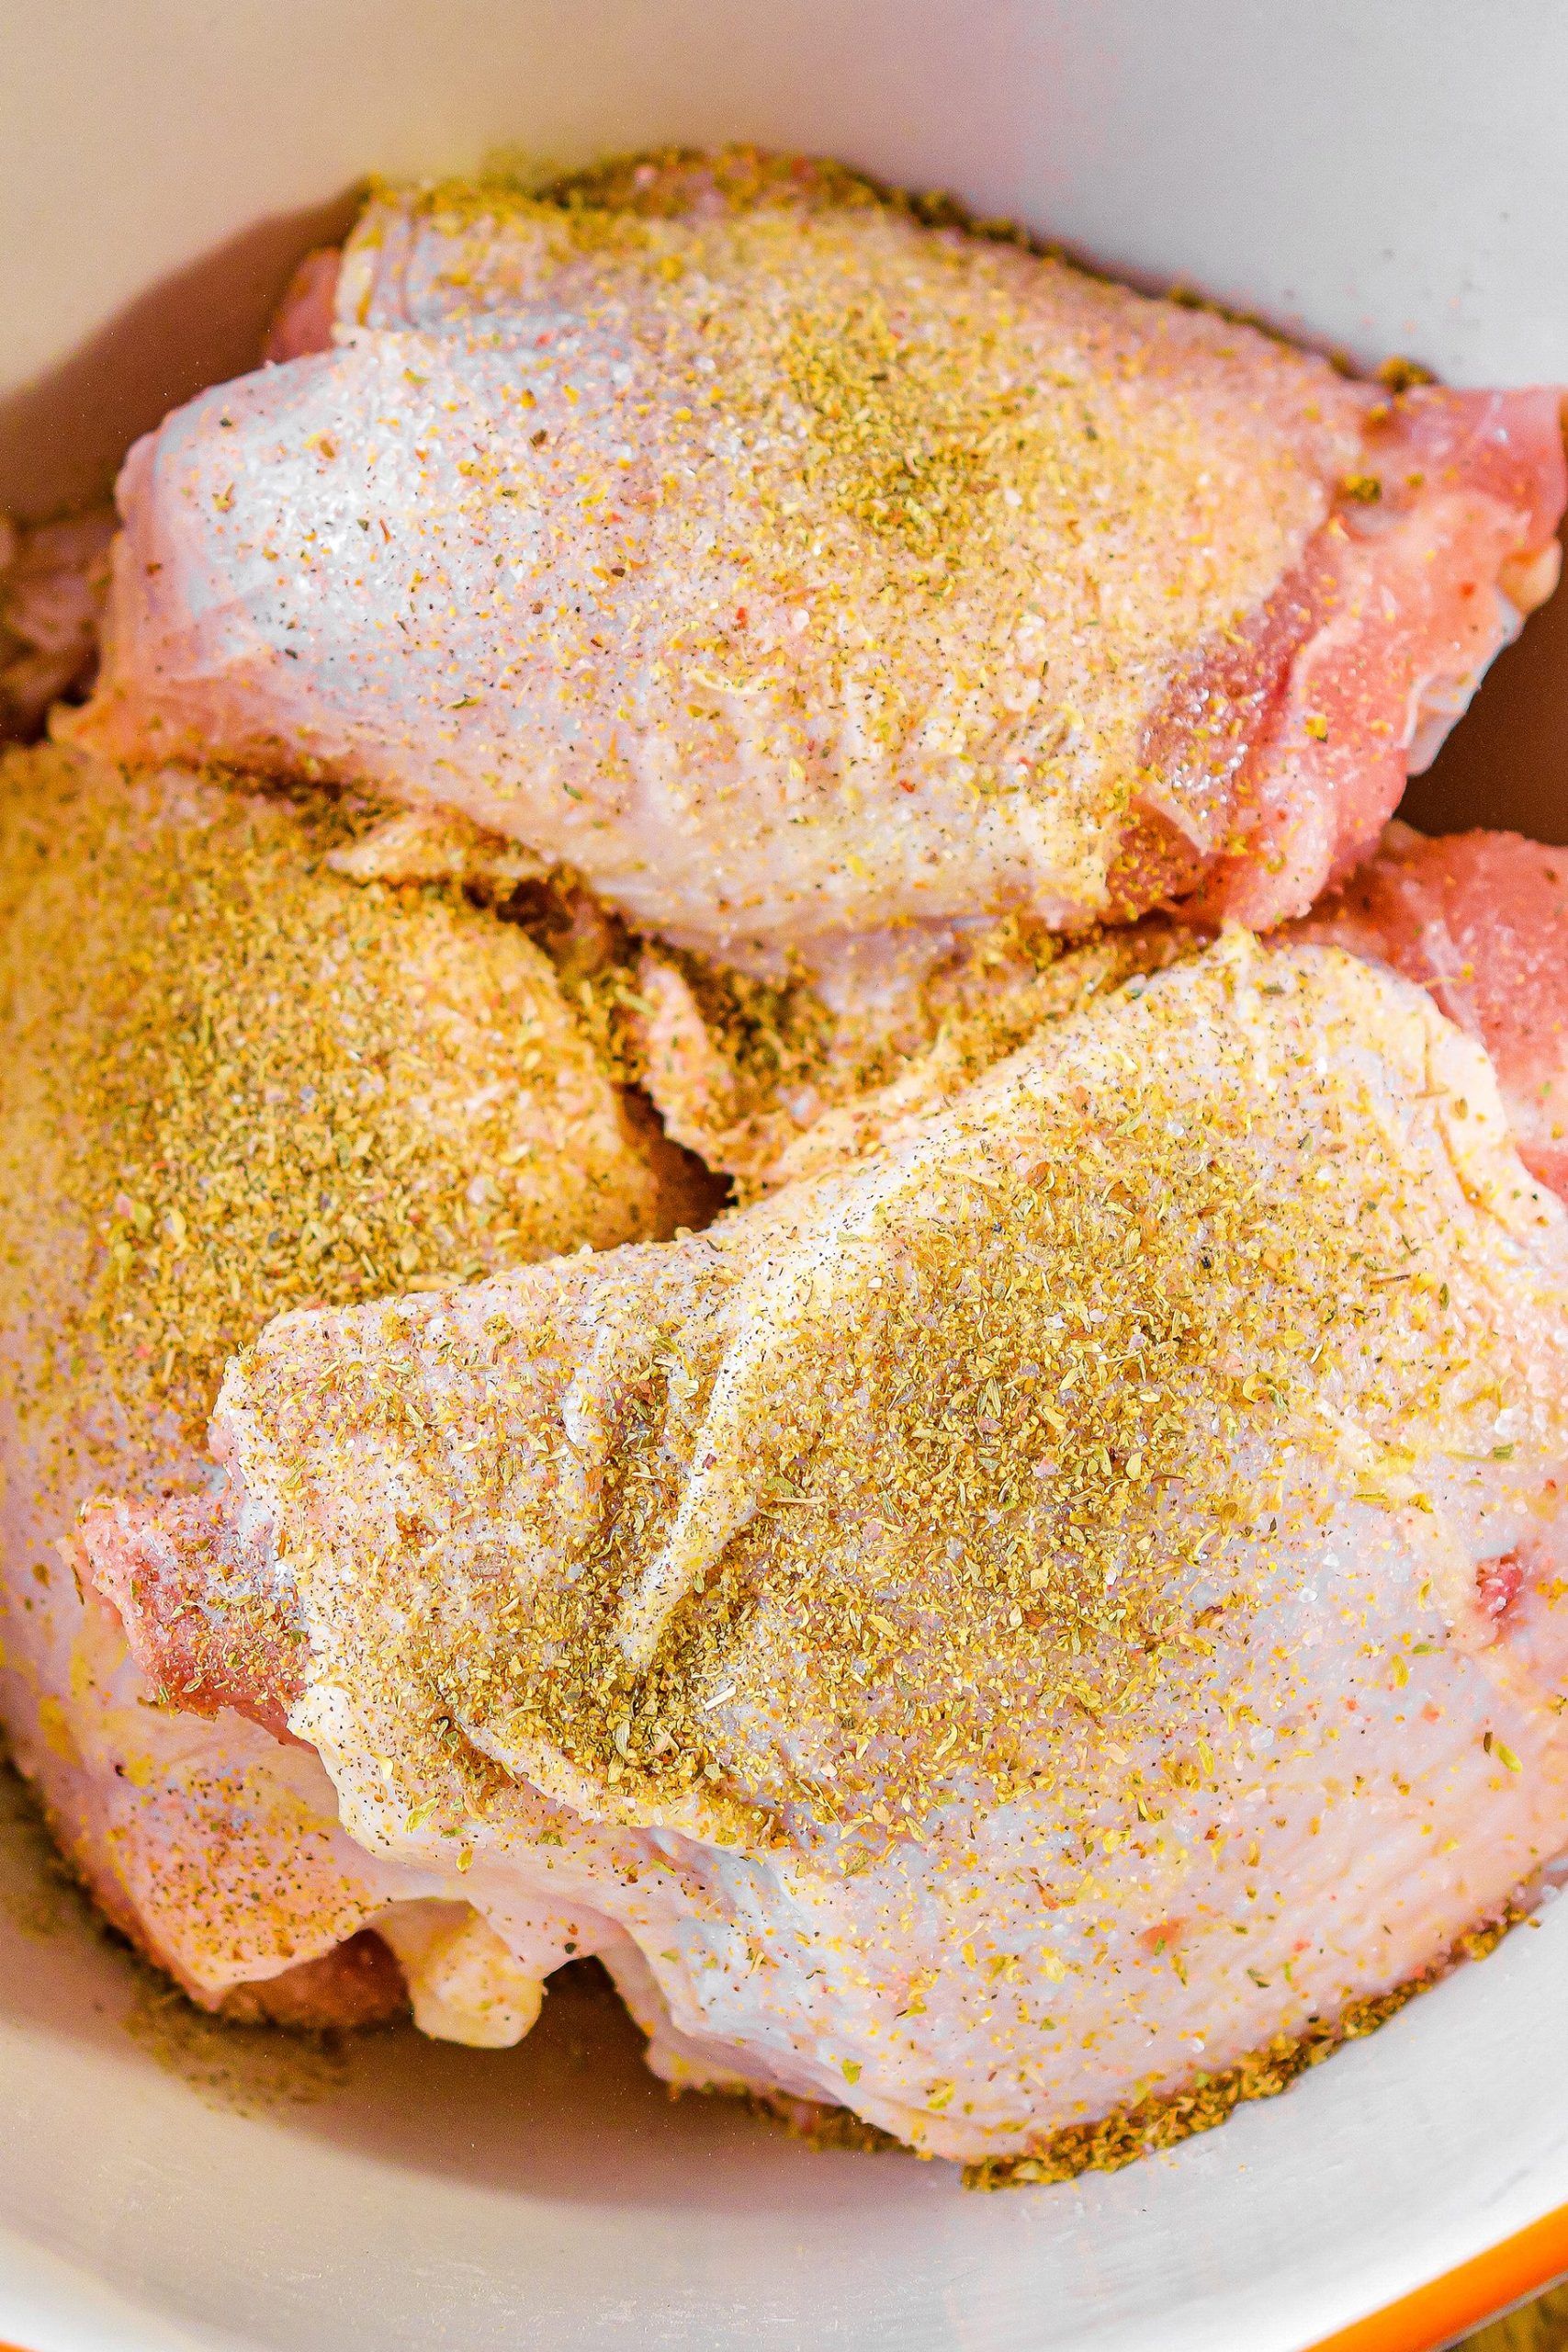 Season the chicken thighs with salt and lemon pepper seasoning.